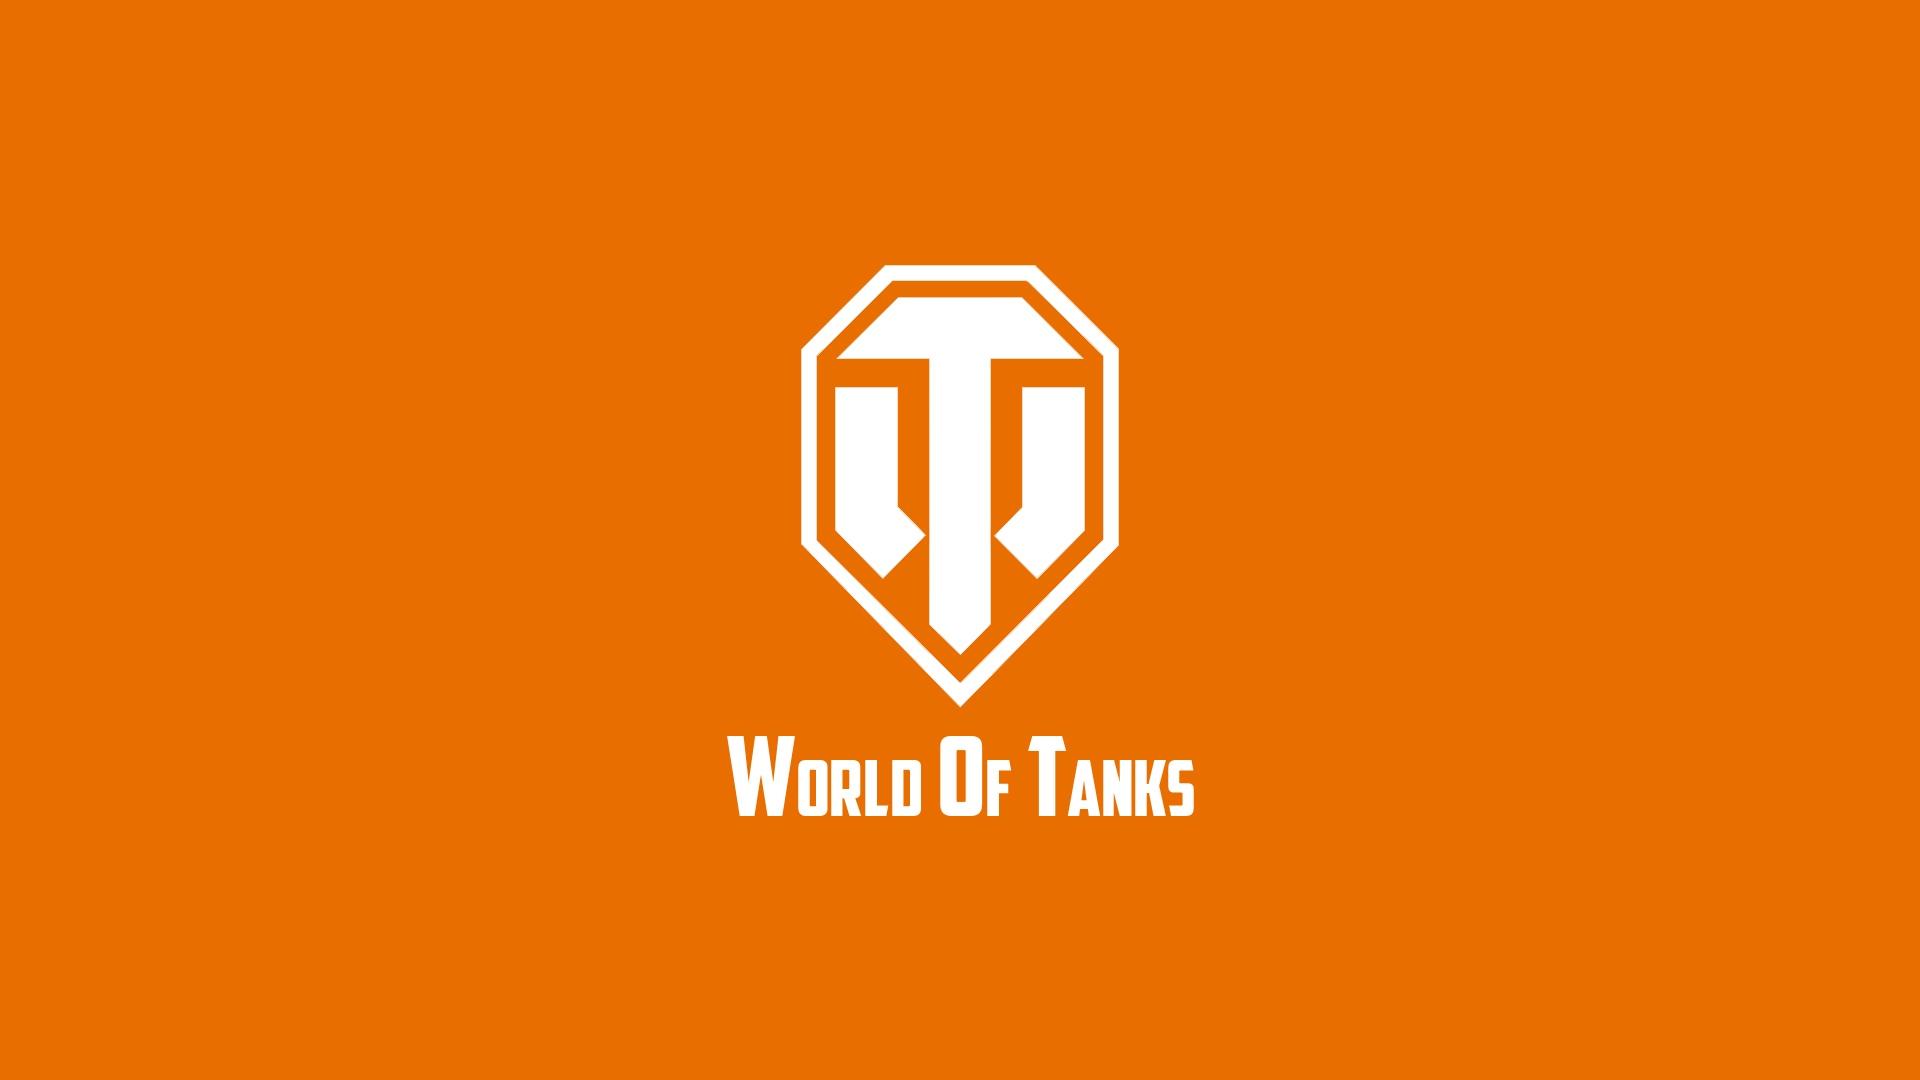 Download wallpaper 1920x1080 world of tanks, wot, logo HD background